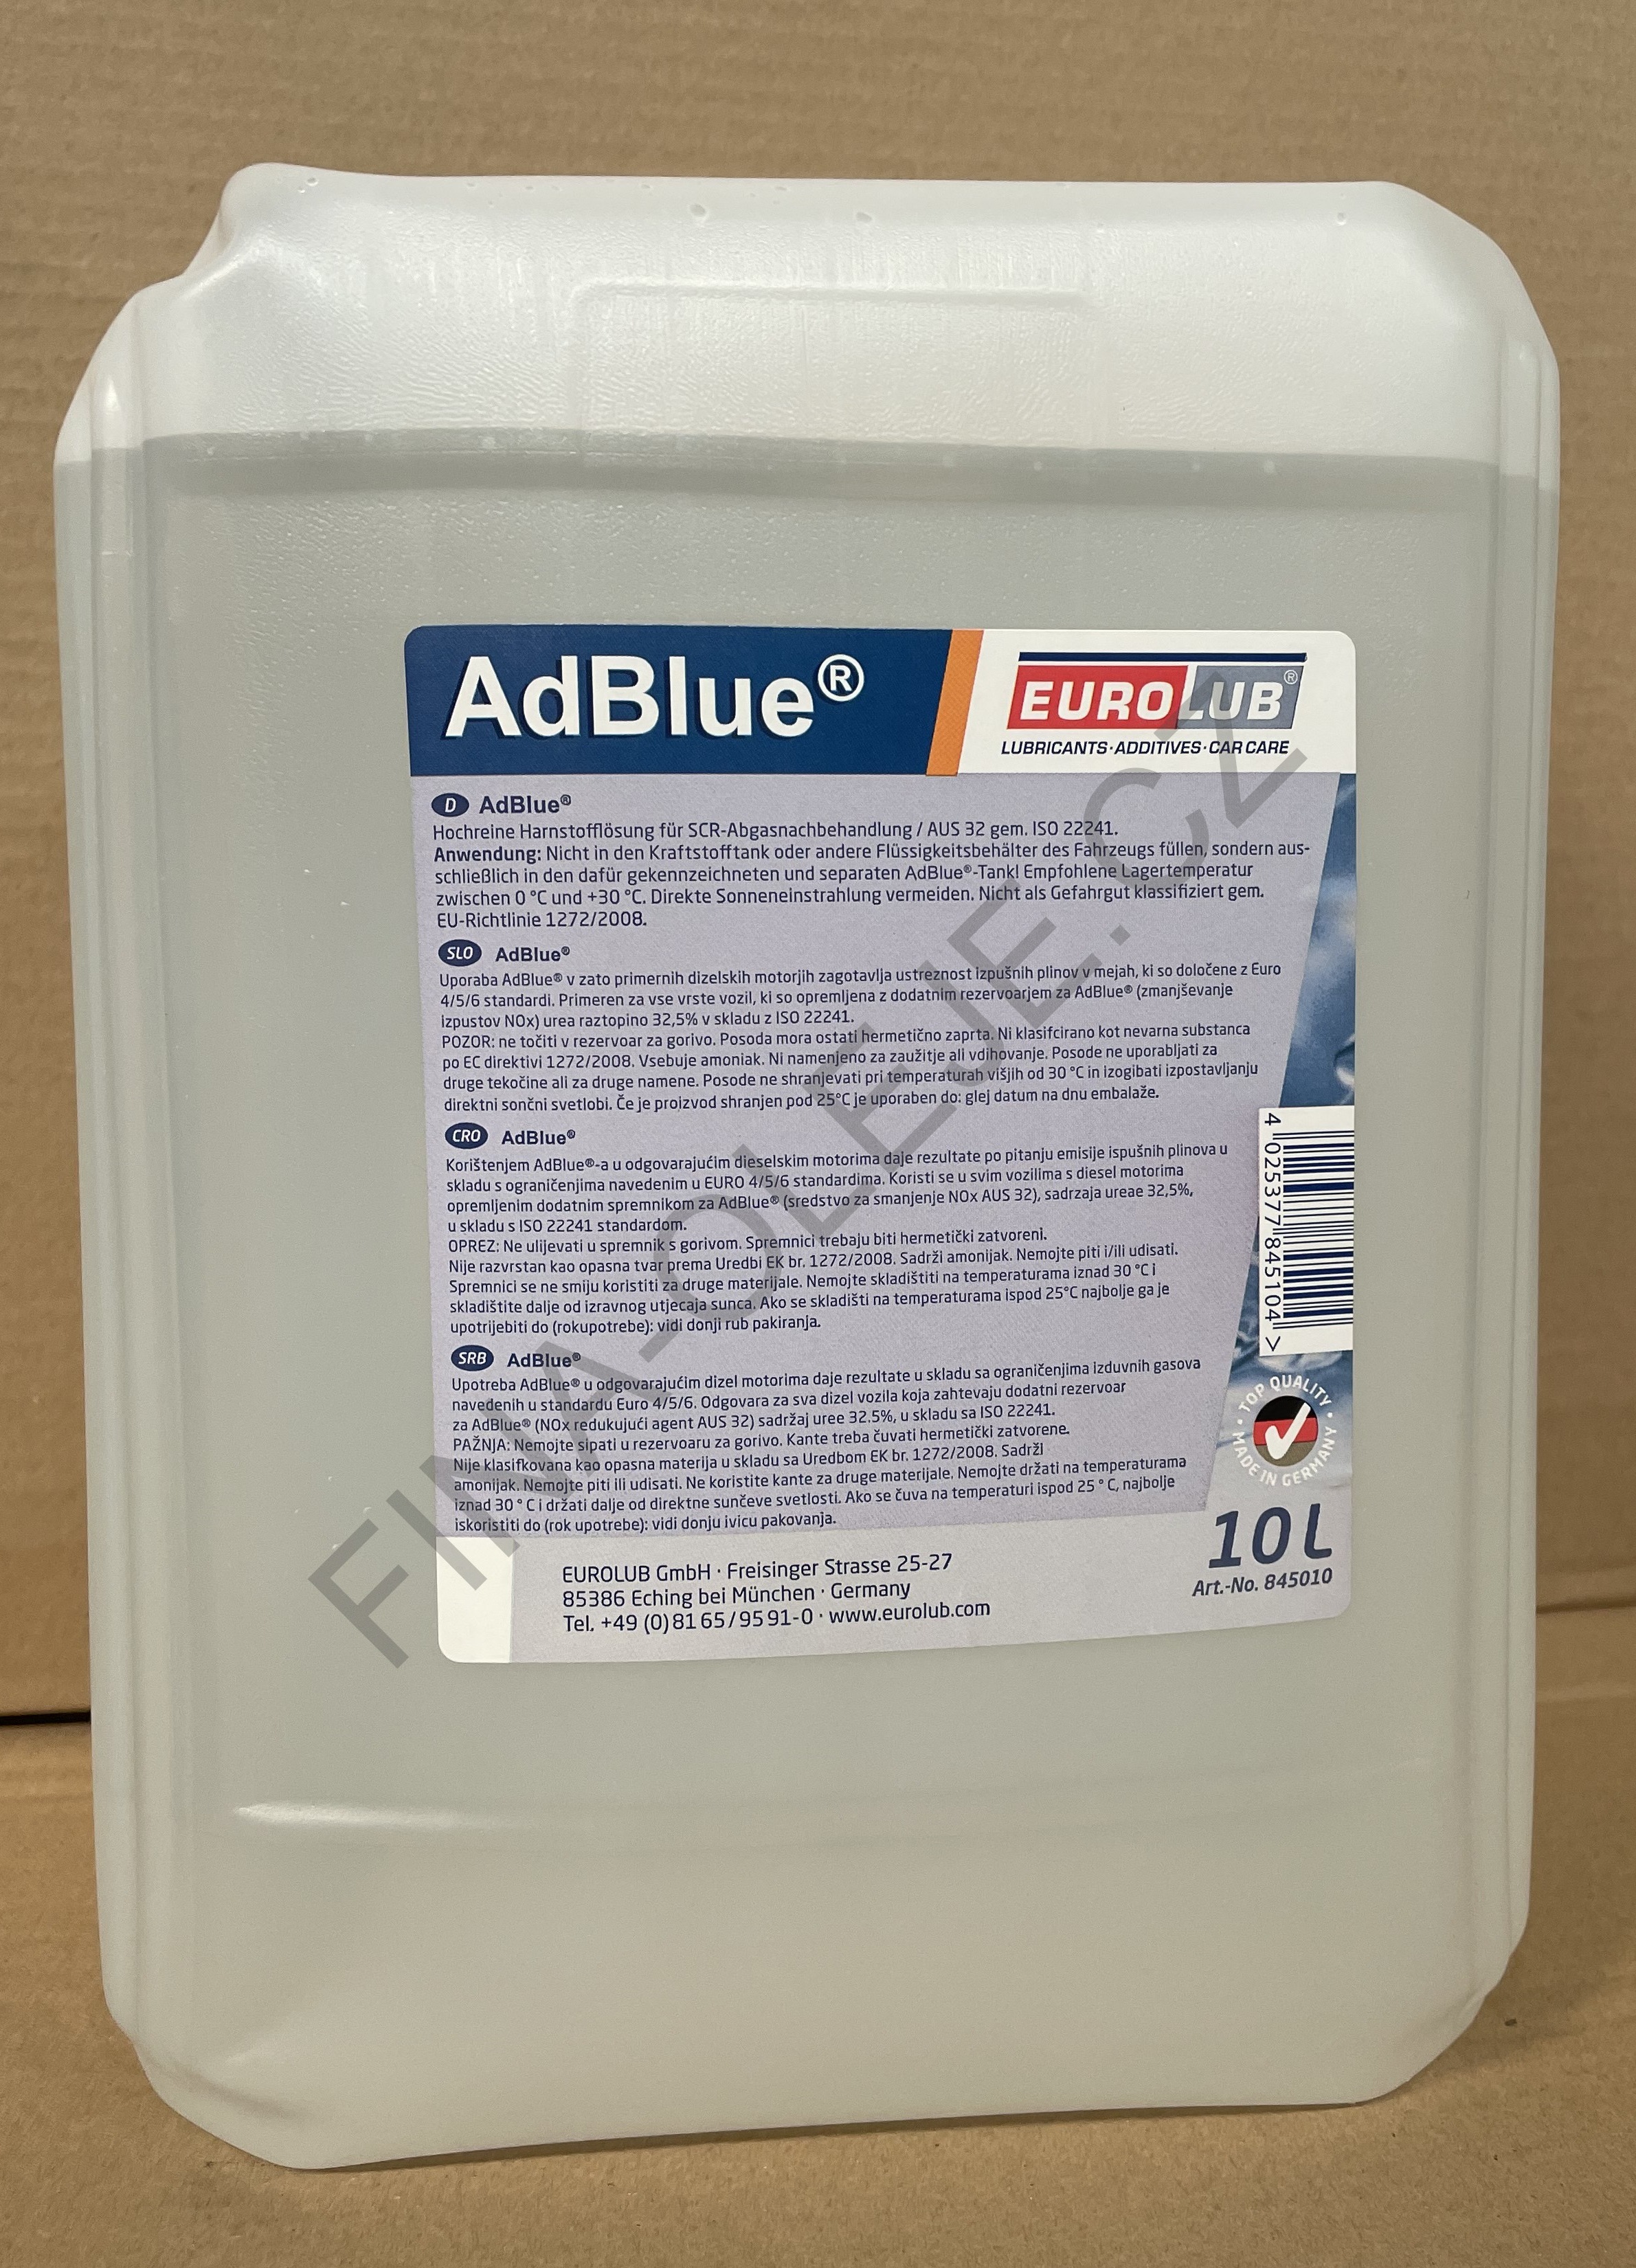 MOTOREX Additiv AdBlue 10l